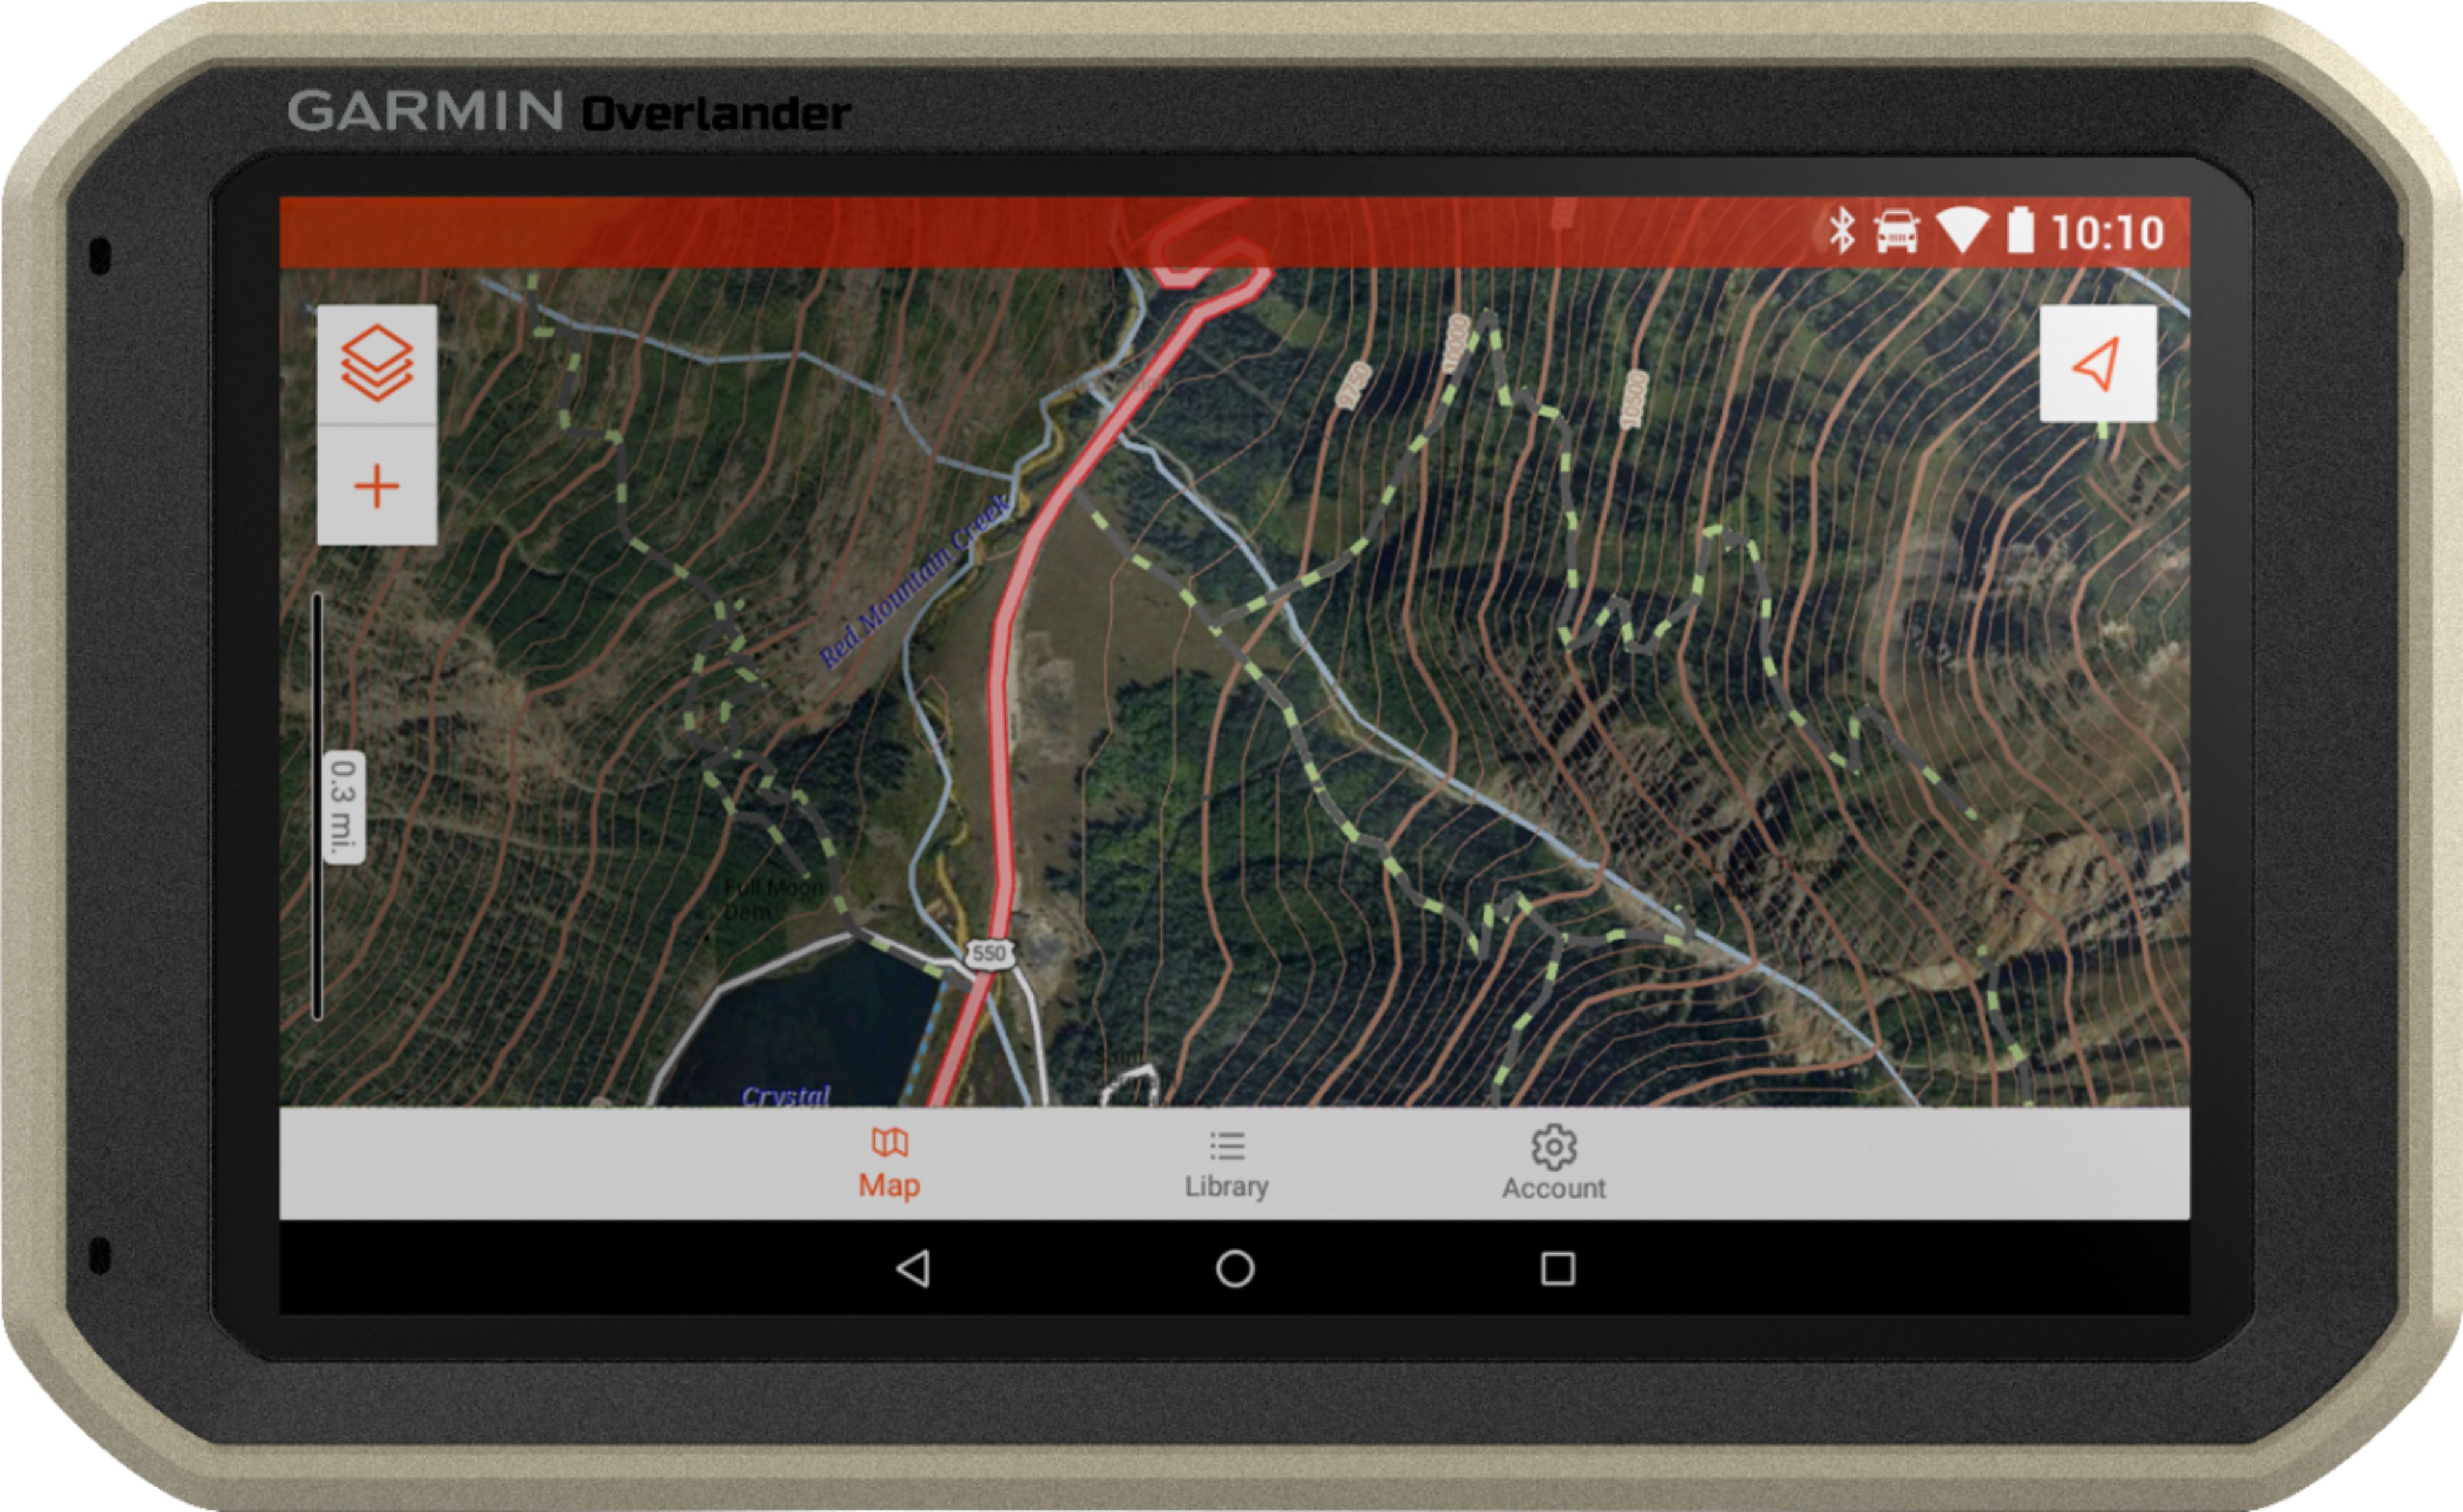 Garmin - Overlander GPS with Built-In Bluetooth - Gray